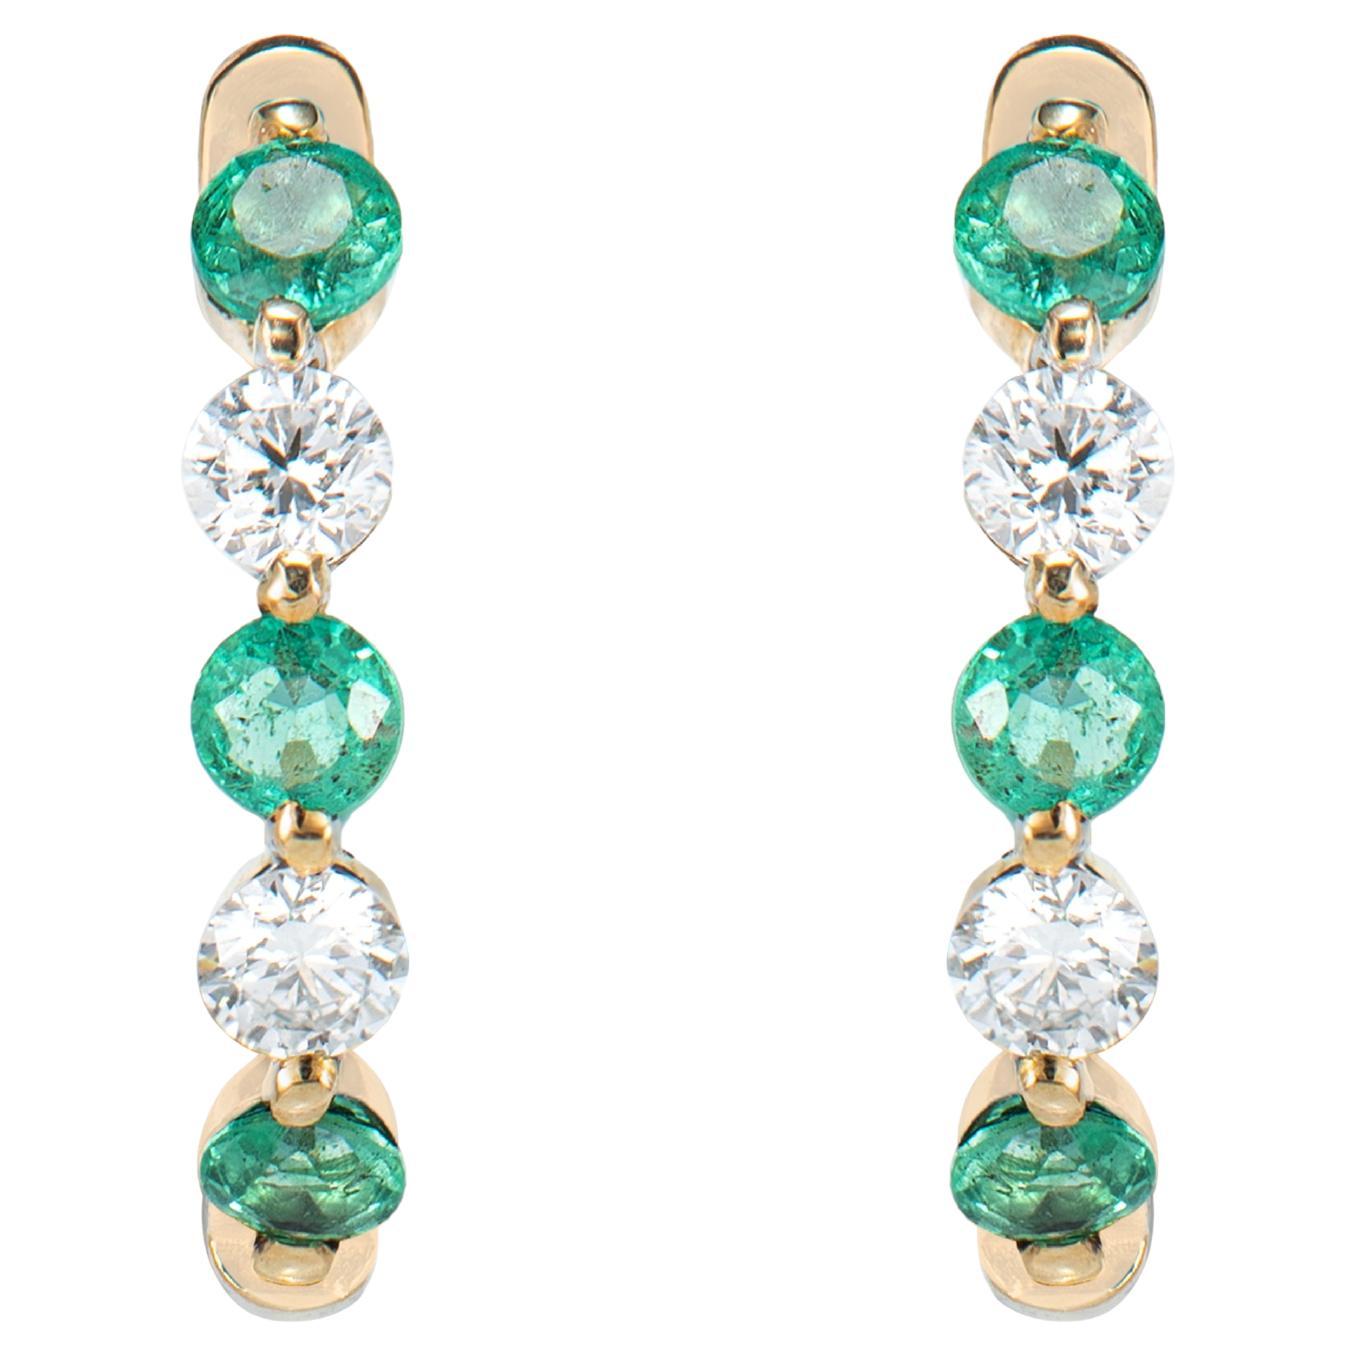 0.502 Carat Emerald Hoop Earrings in 14 Karat Yellow Gold with White Diamond